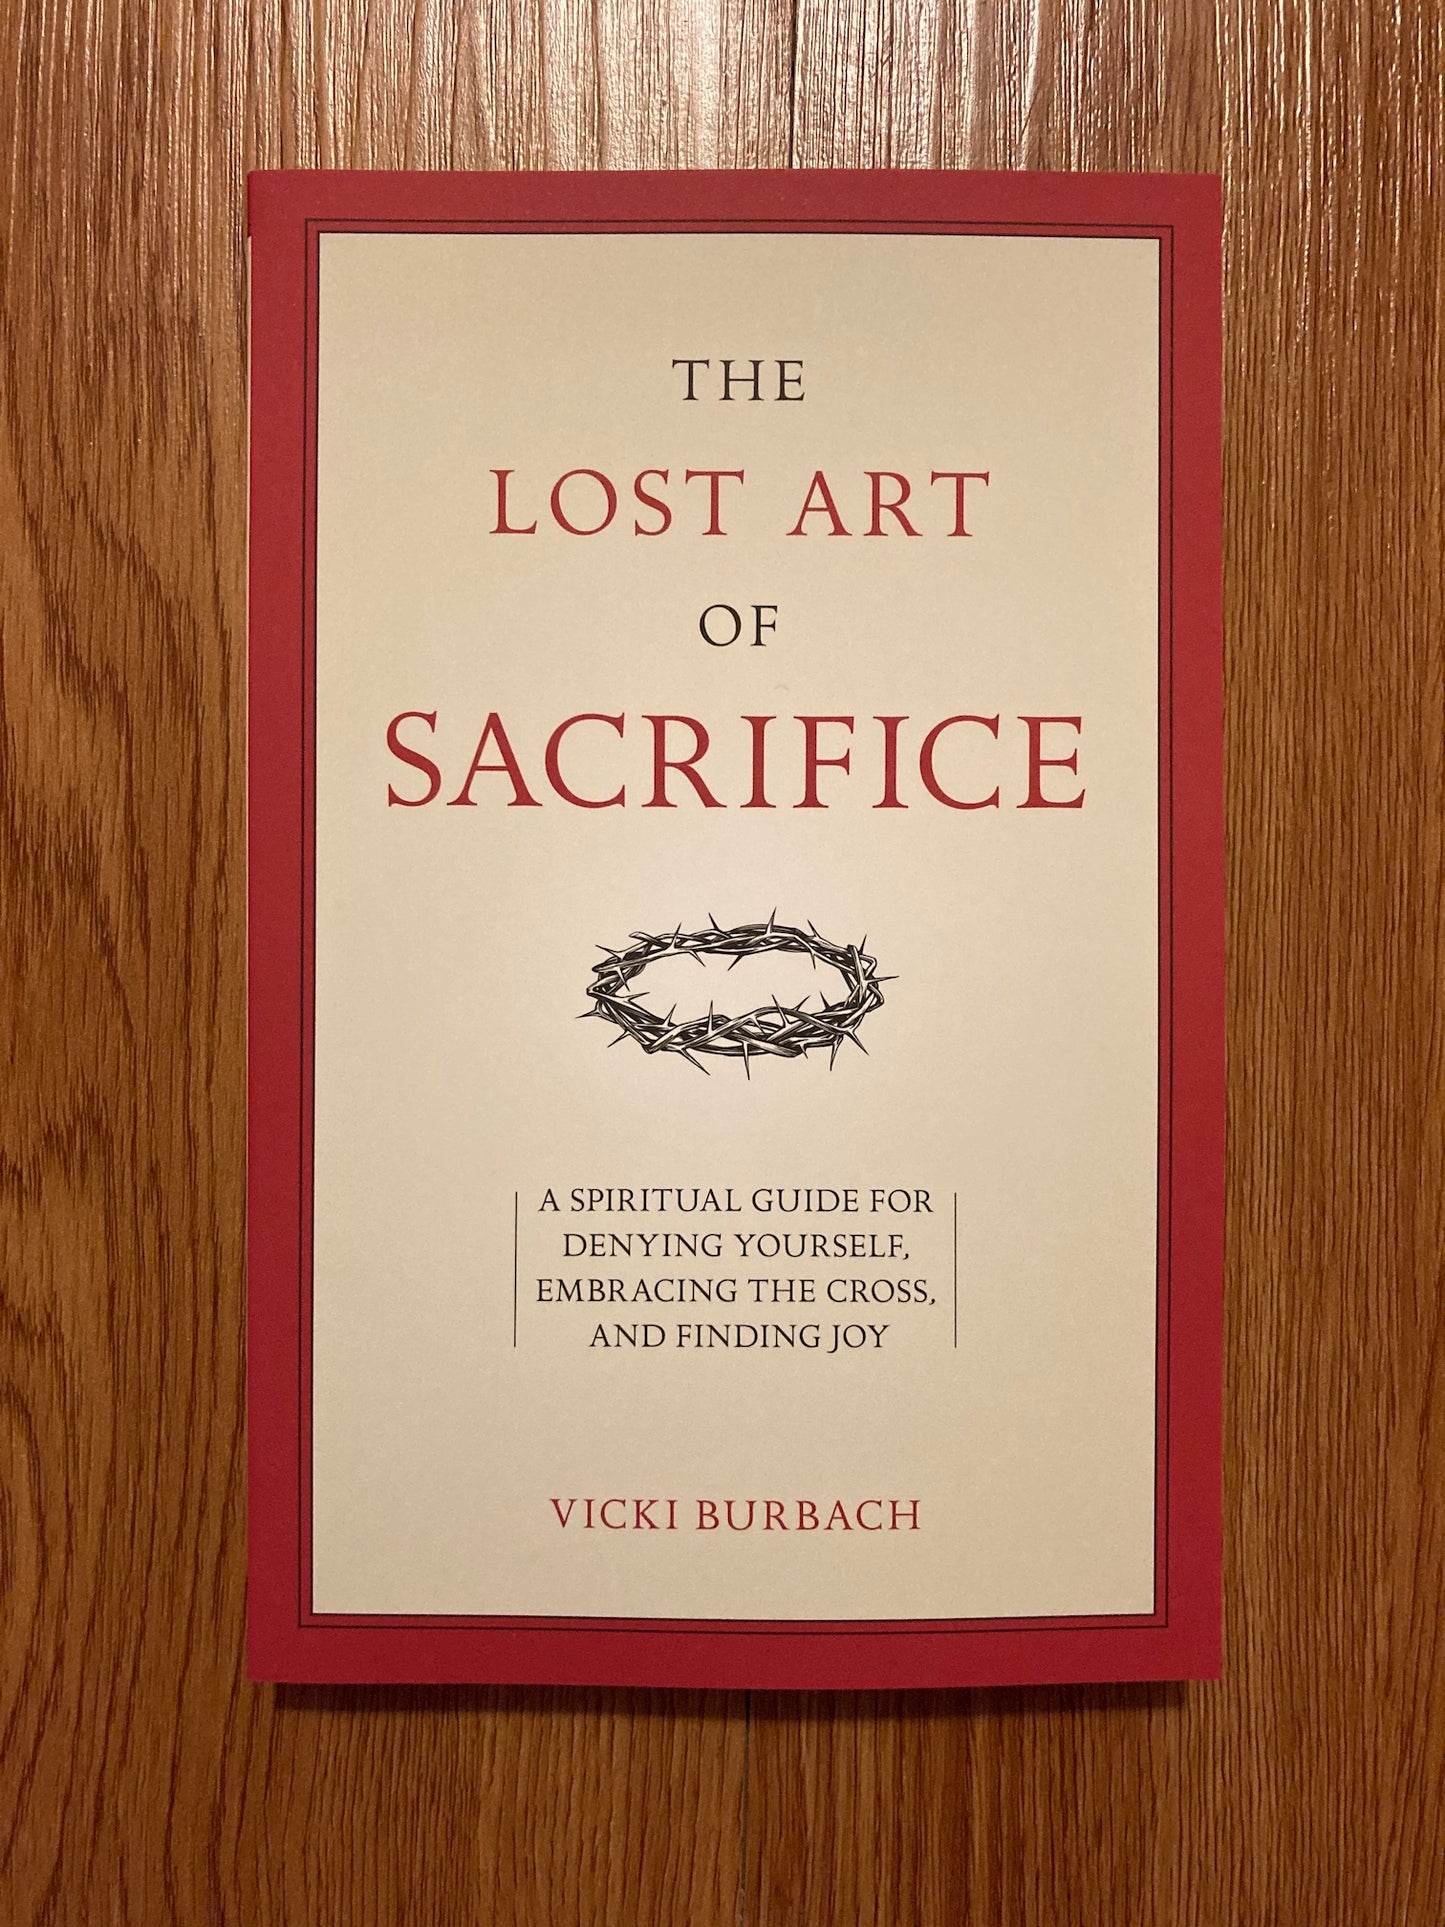 The Lost Art of Sacrifice, by Vicki Burbach